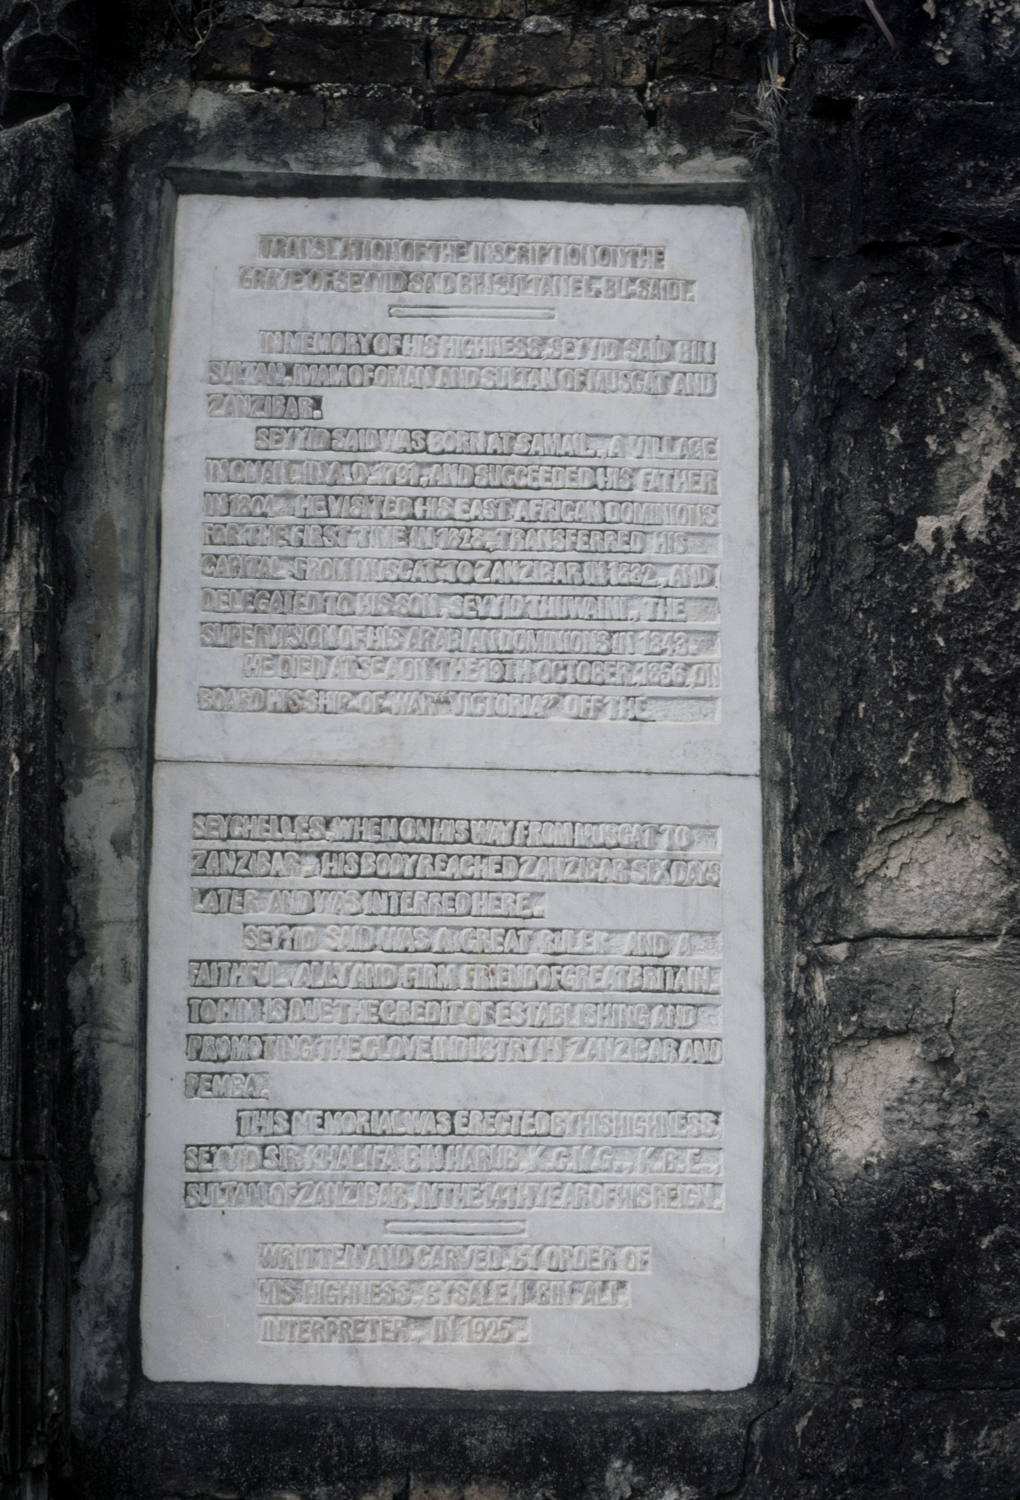 Memorial plaque for Seyyid Said bin Sultan in the cemetery